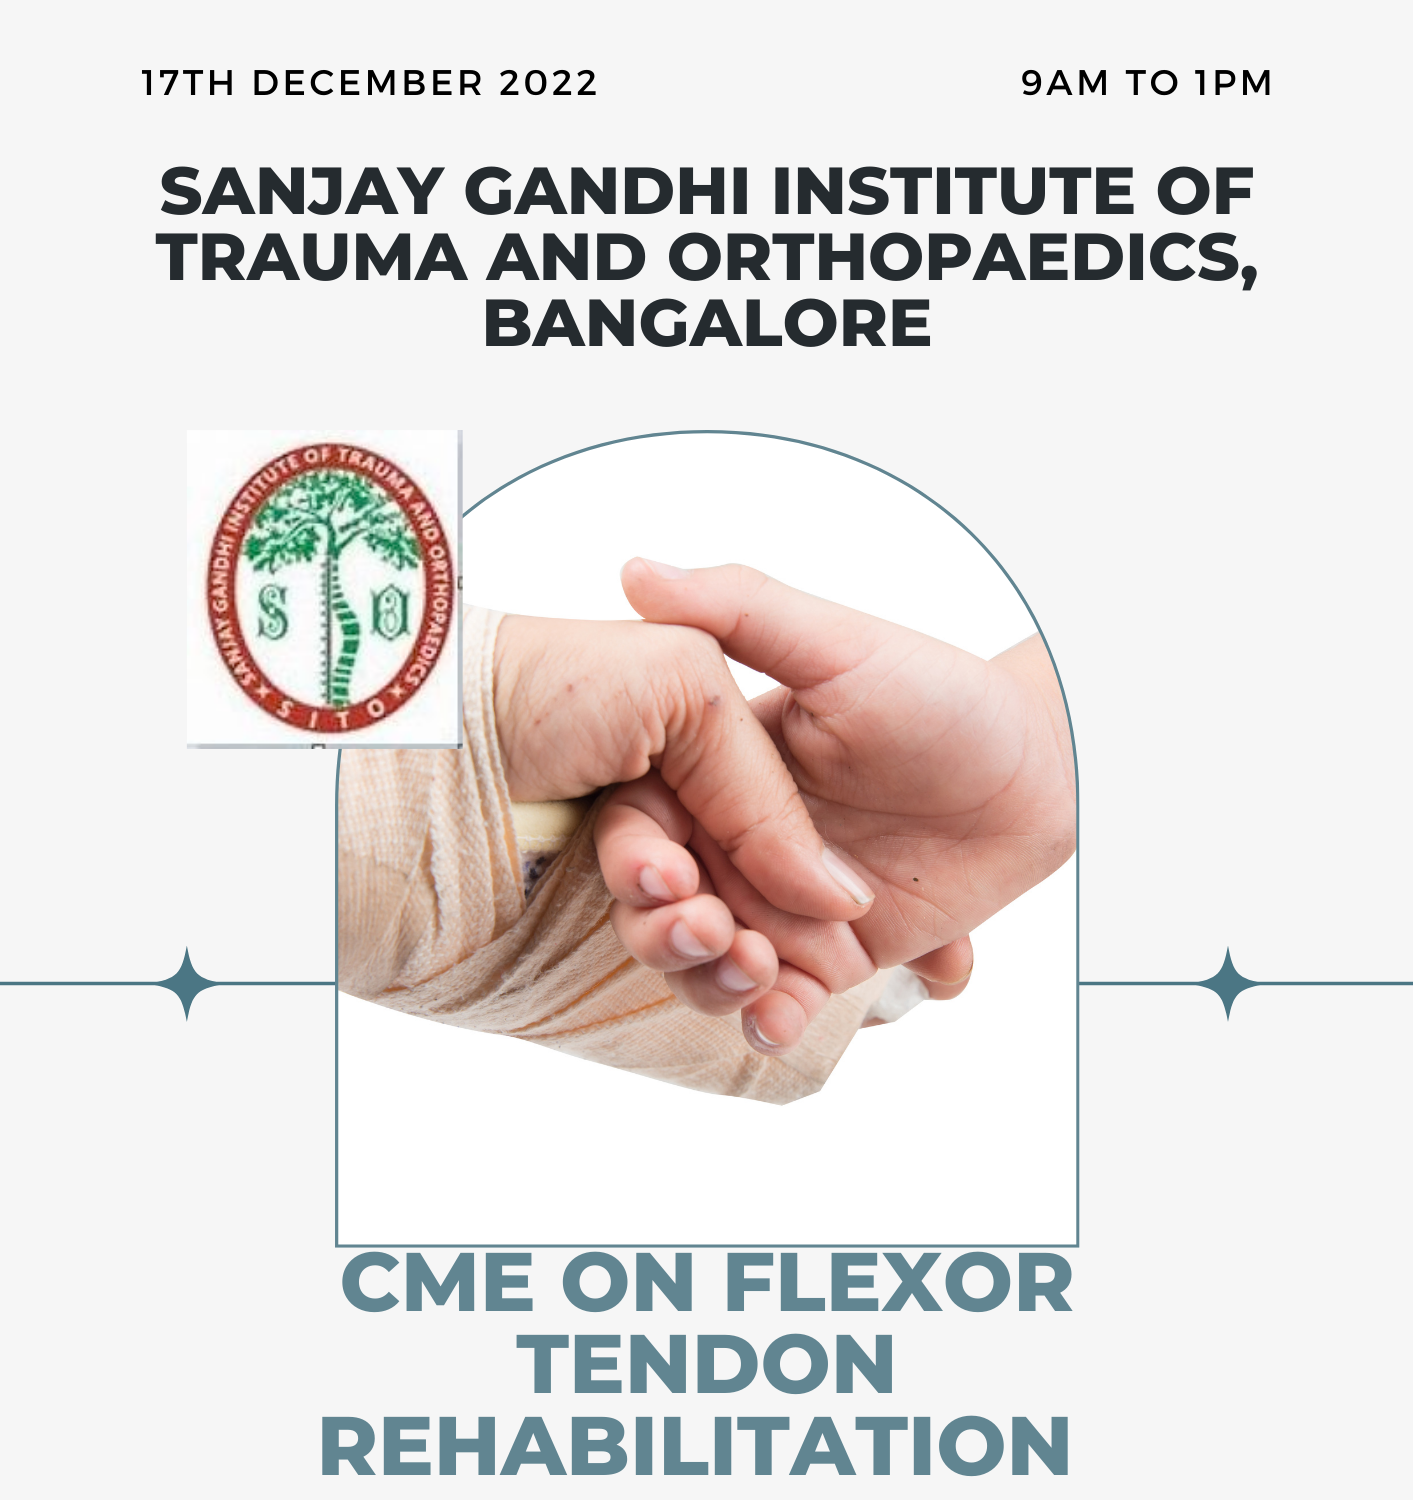 CME on flexor tendon rehabilitation